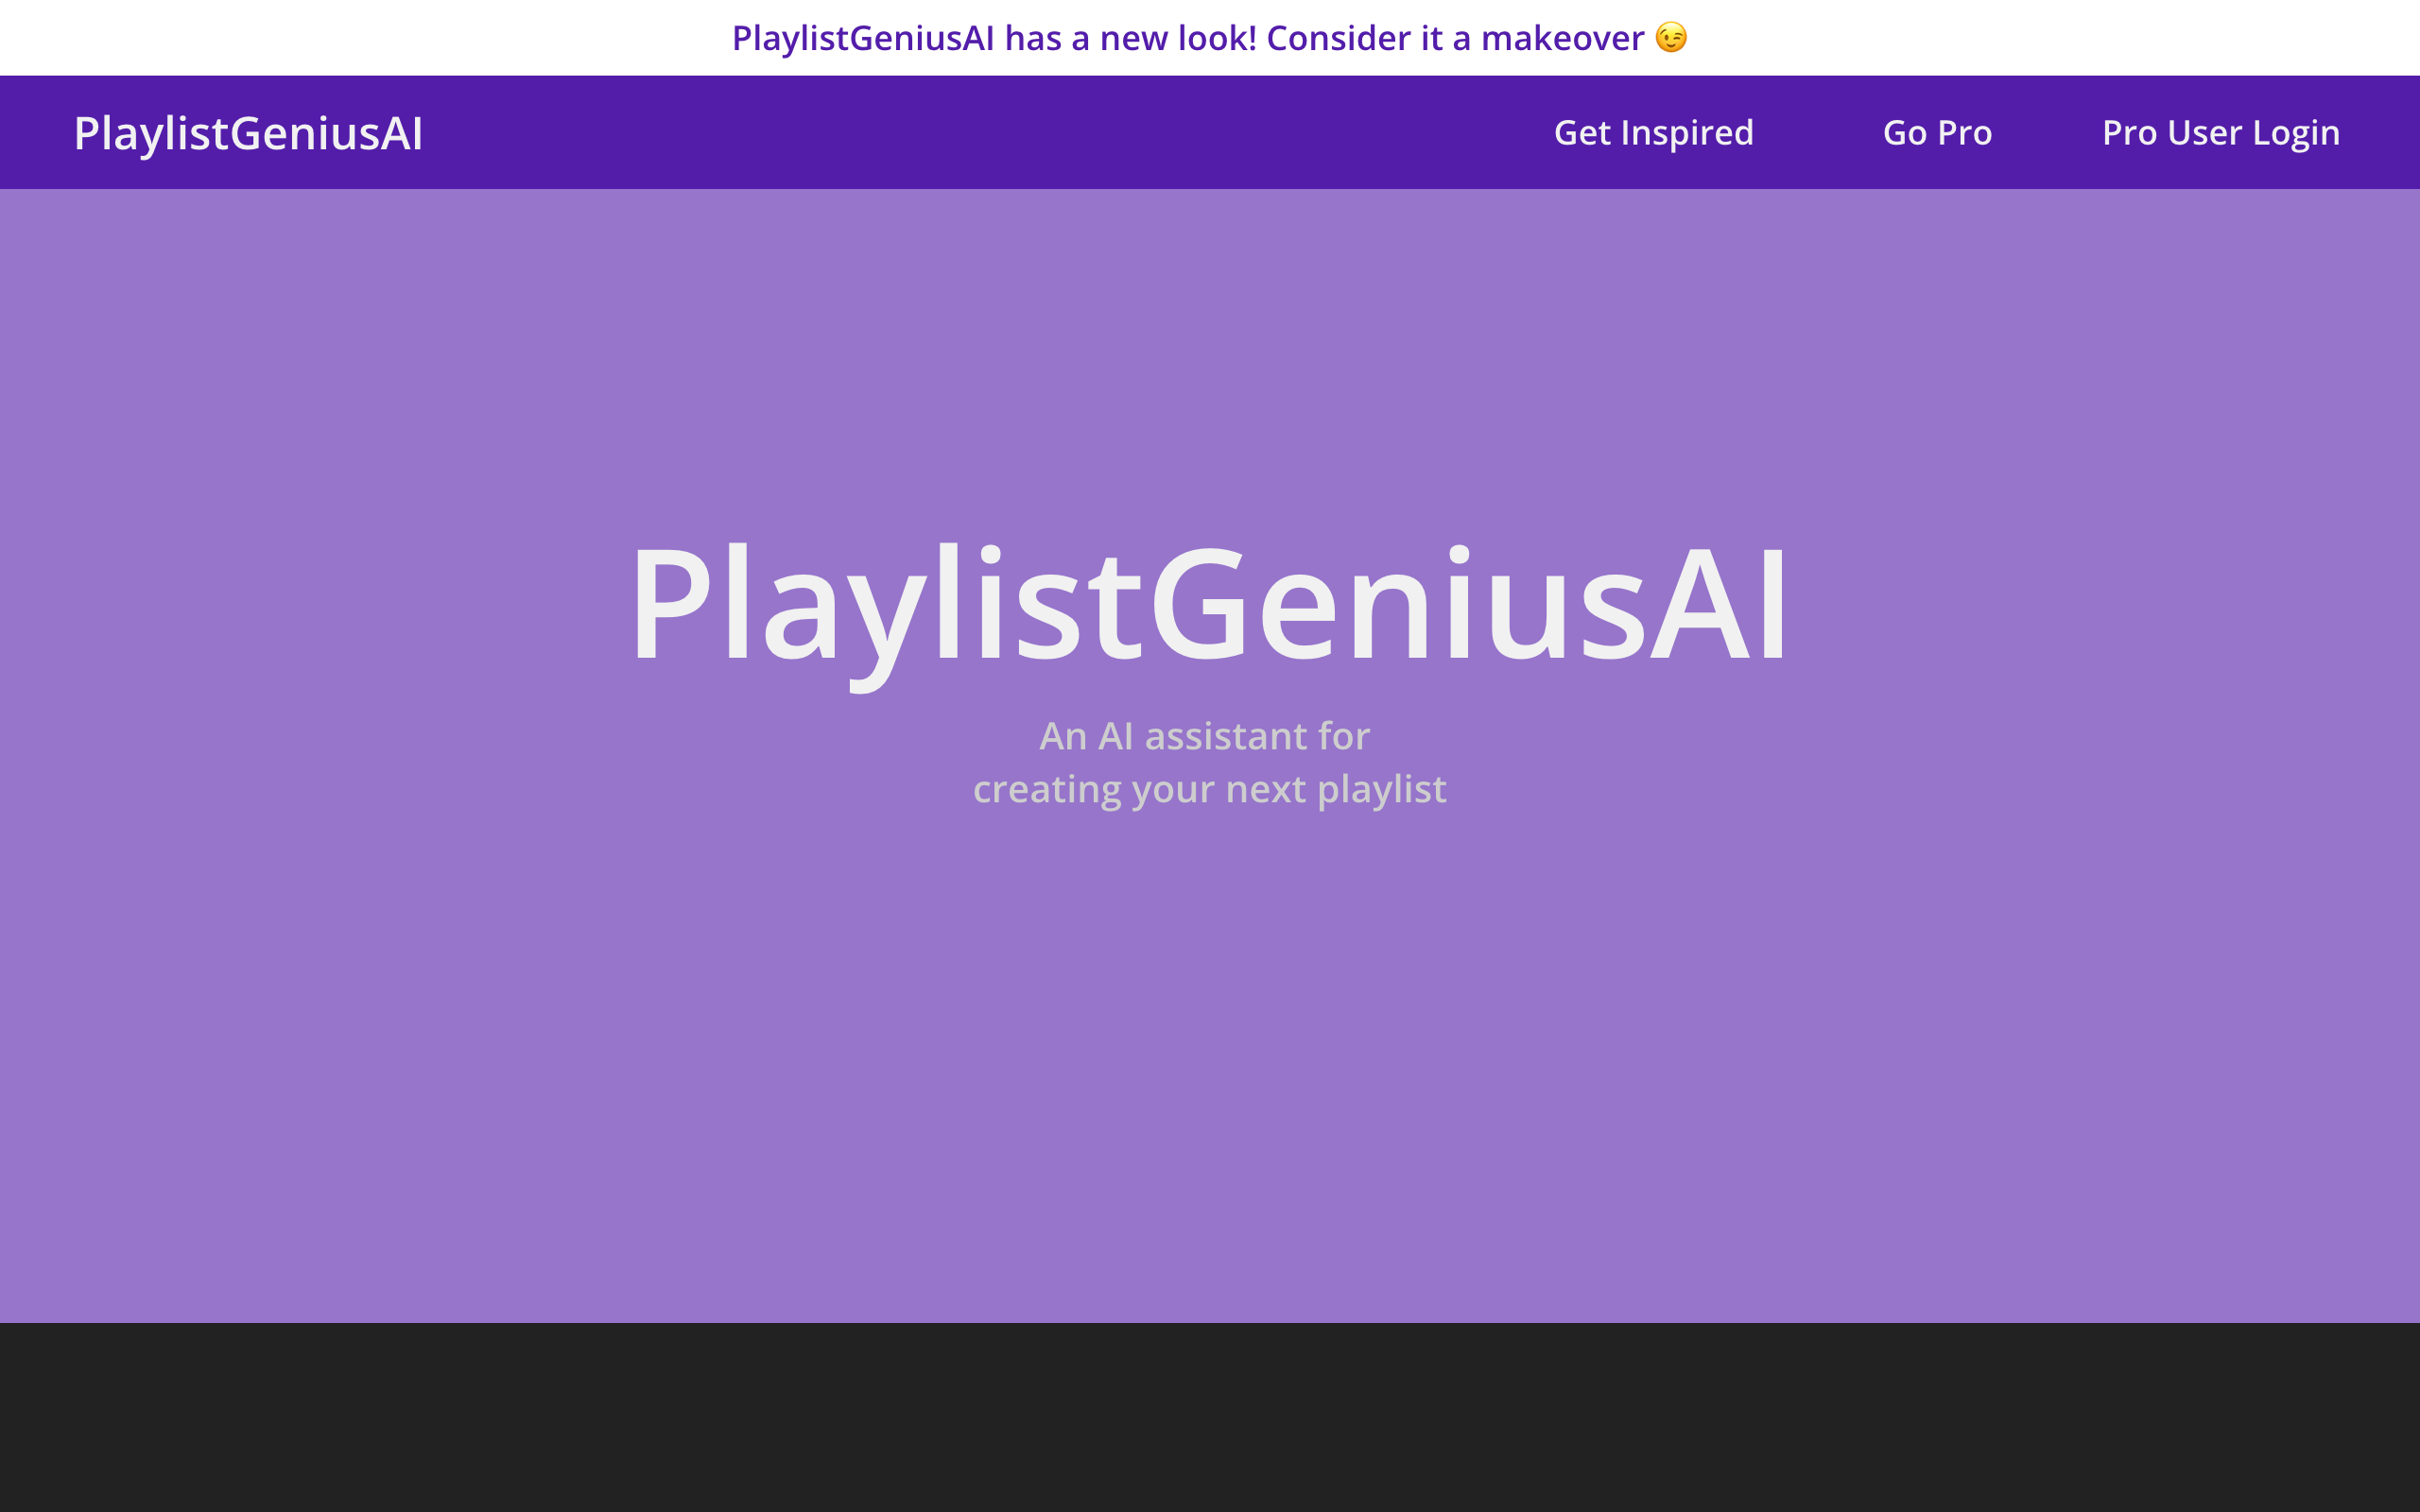 PlaylistGenius AI